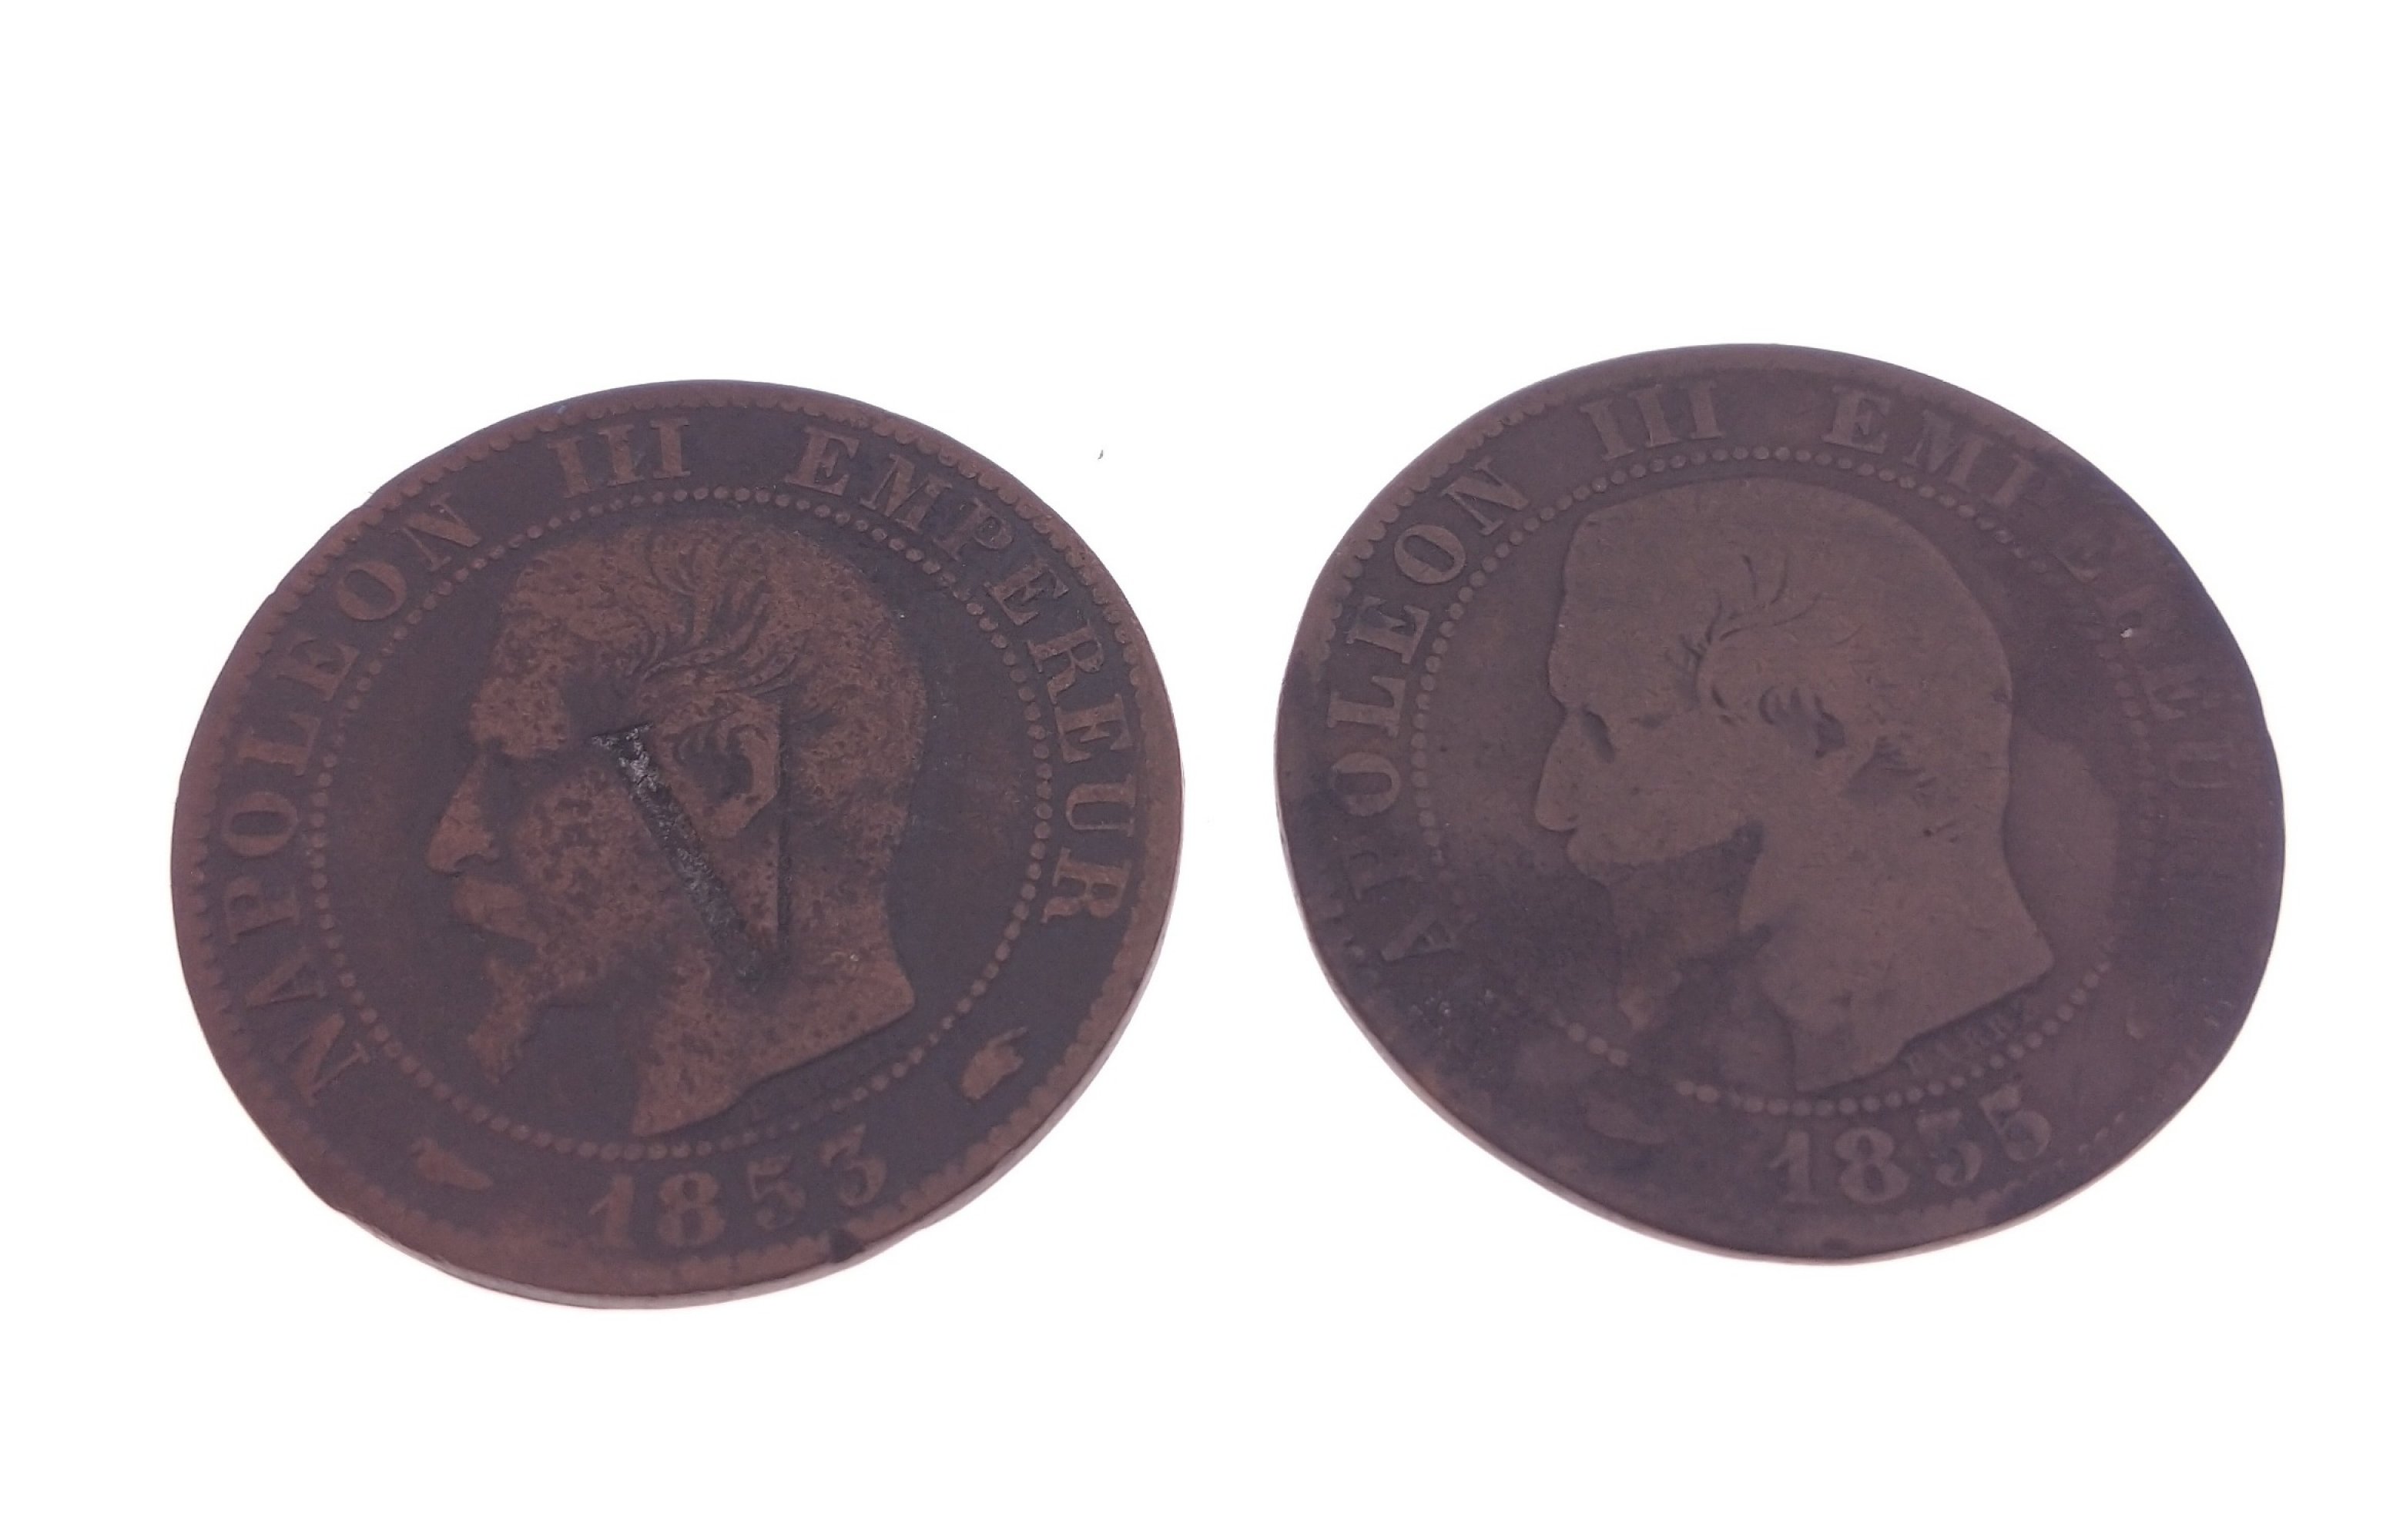 Two 1855 5 Centimes Napoleon III (1808-1873), Empereur de France (1852-1870) coins, bronze, - Image 2 of 4